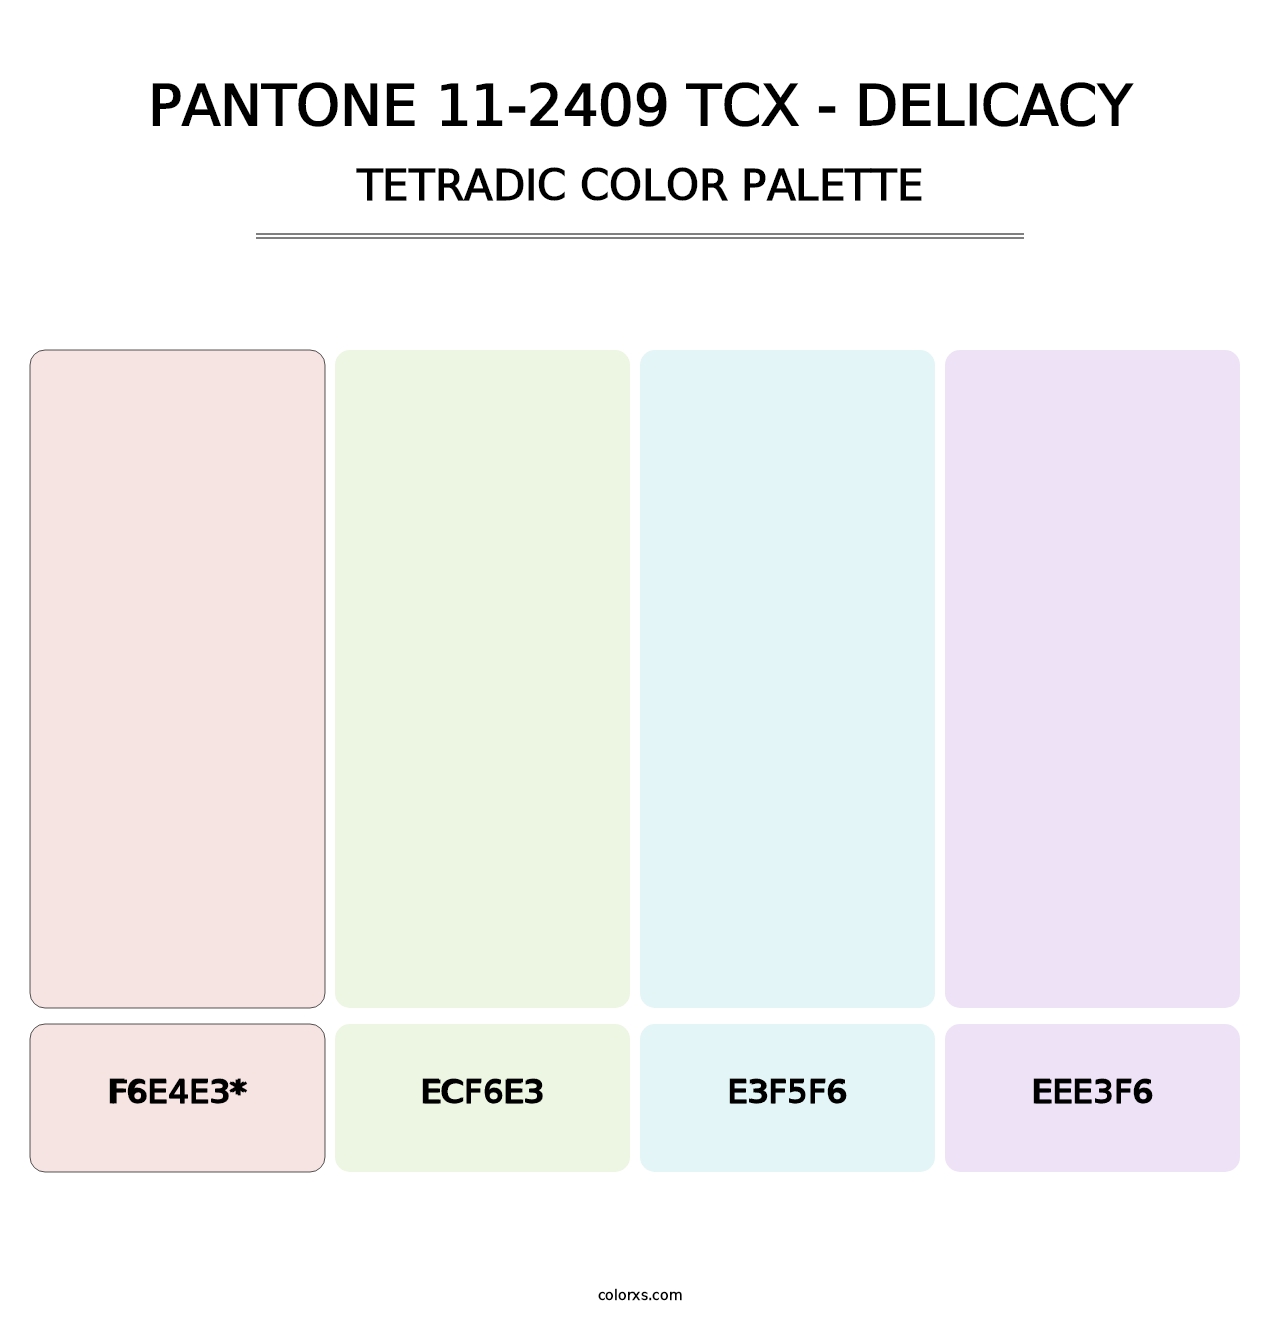 PANTONE 11-2409 TCX - Delicacy - Tetradic Color Palette